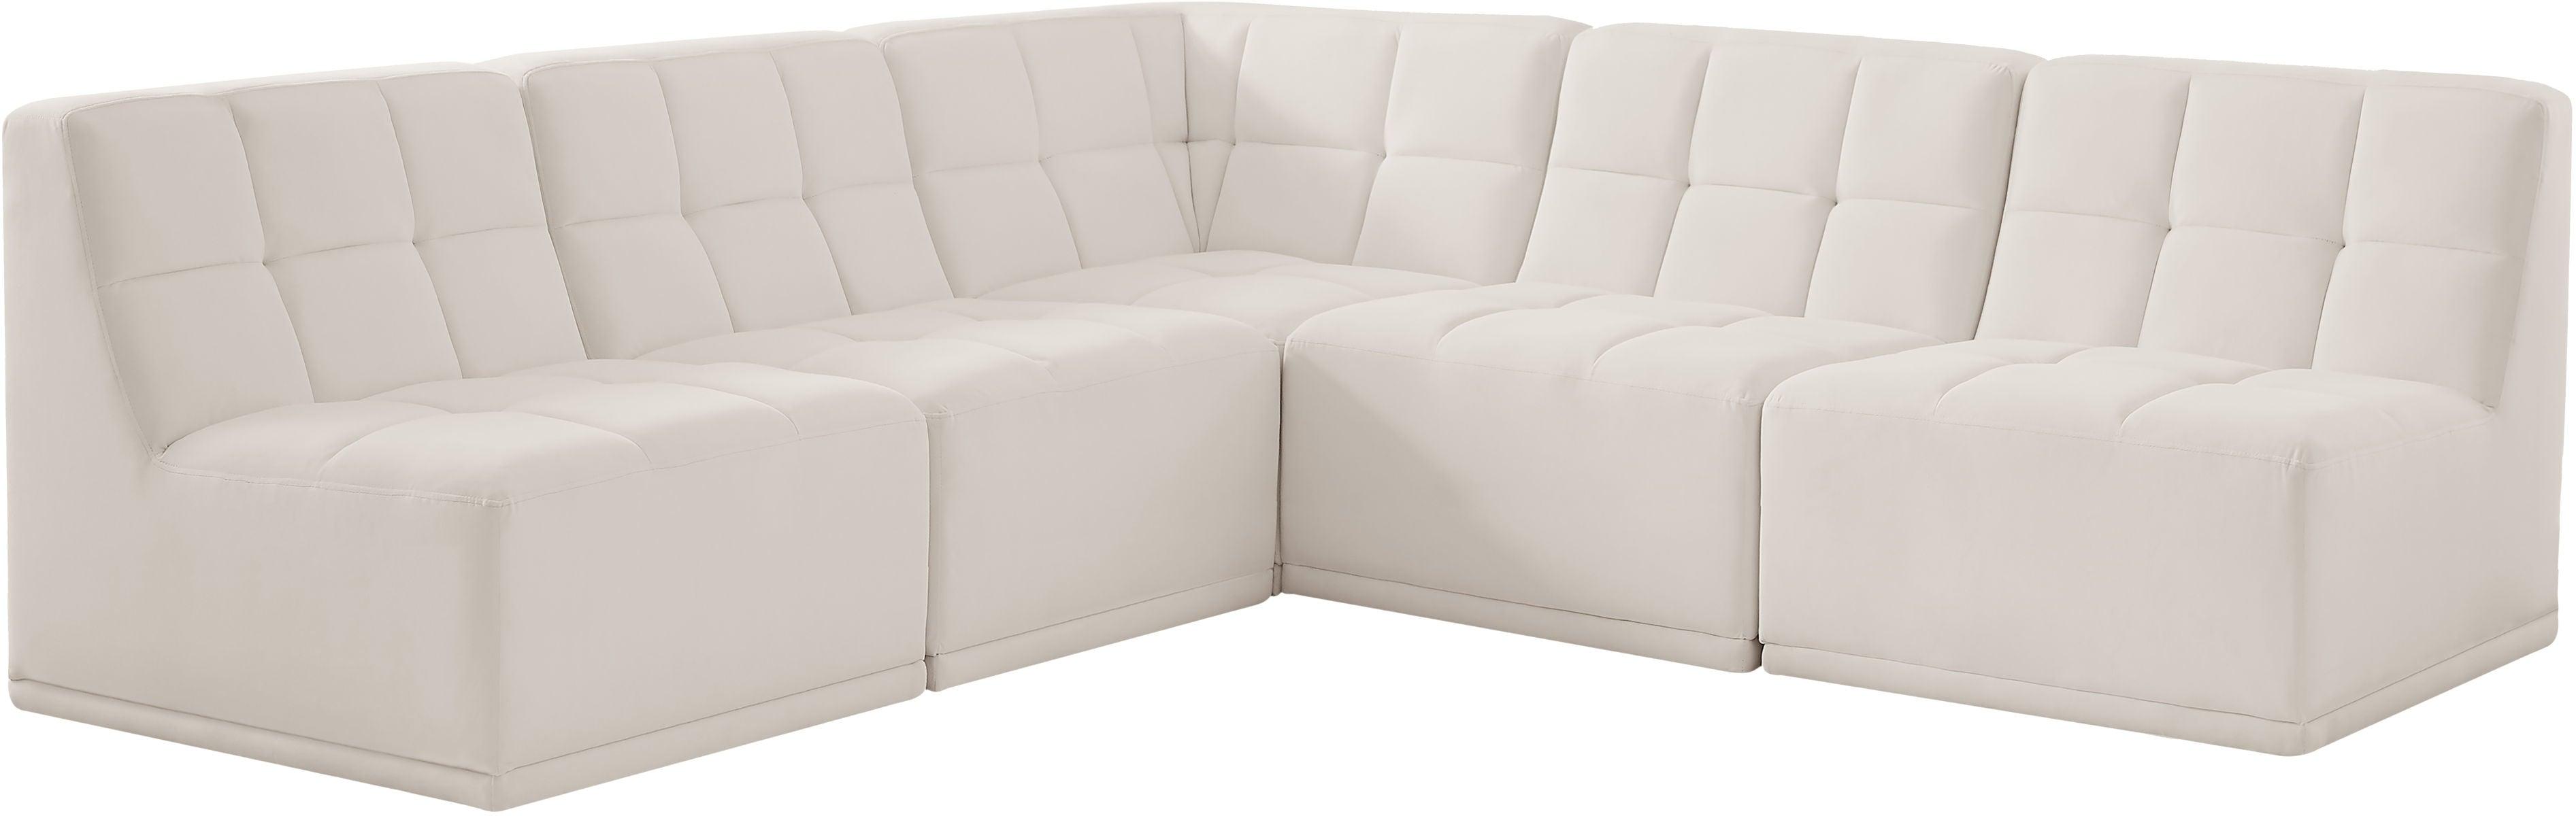 Meridian Furniture - Relax - Modular Sectional 5 Piece - Cream - 5th Avenue Furniture